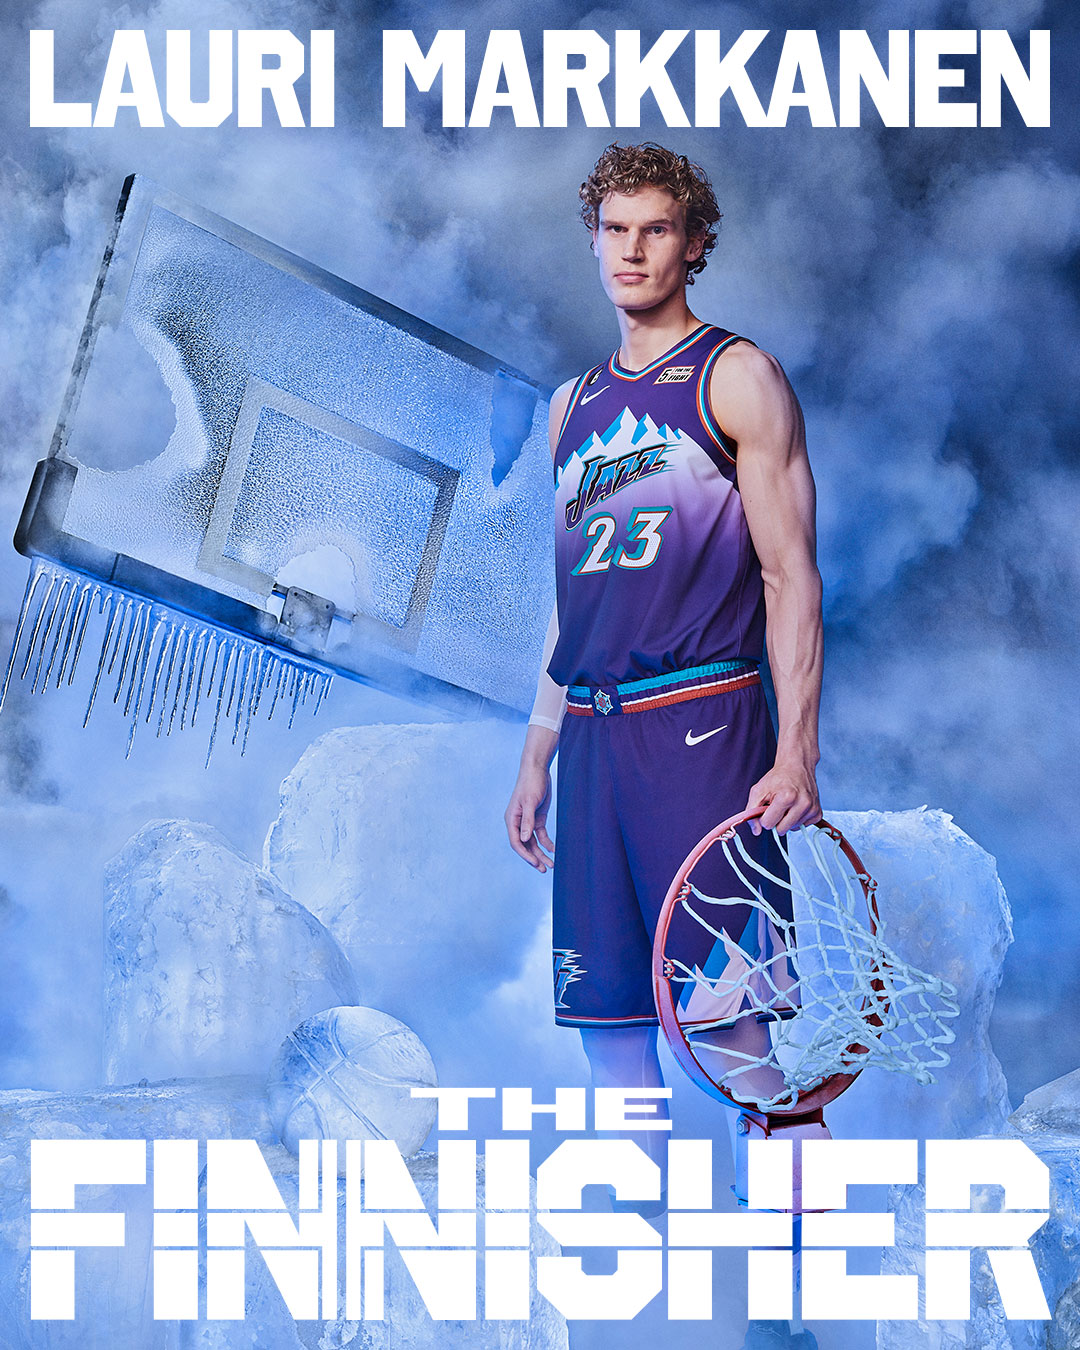 Utah Jazz make Lauri Markkanen posters for NBA All-Star campaign